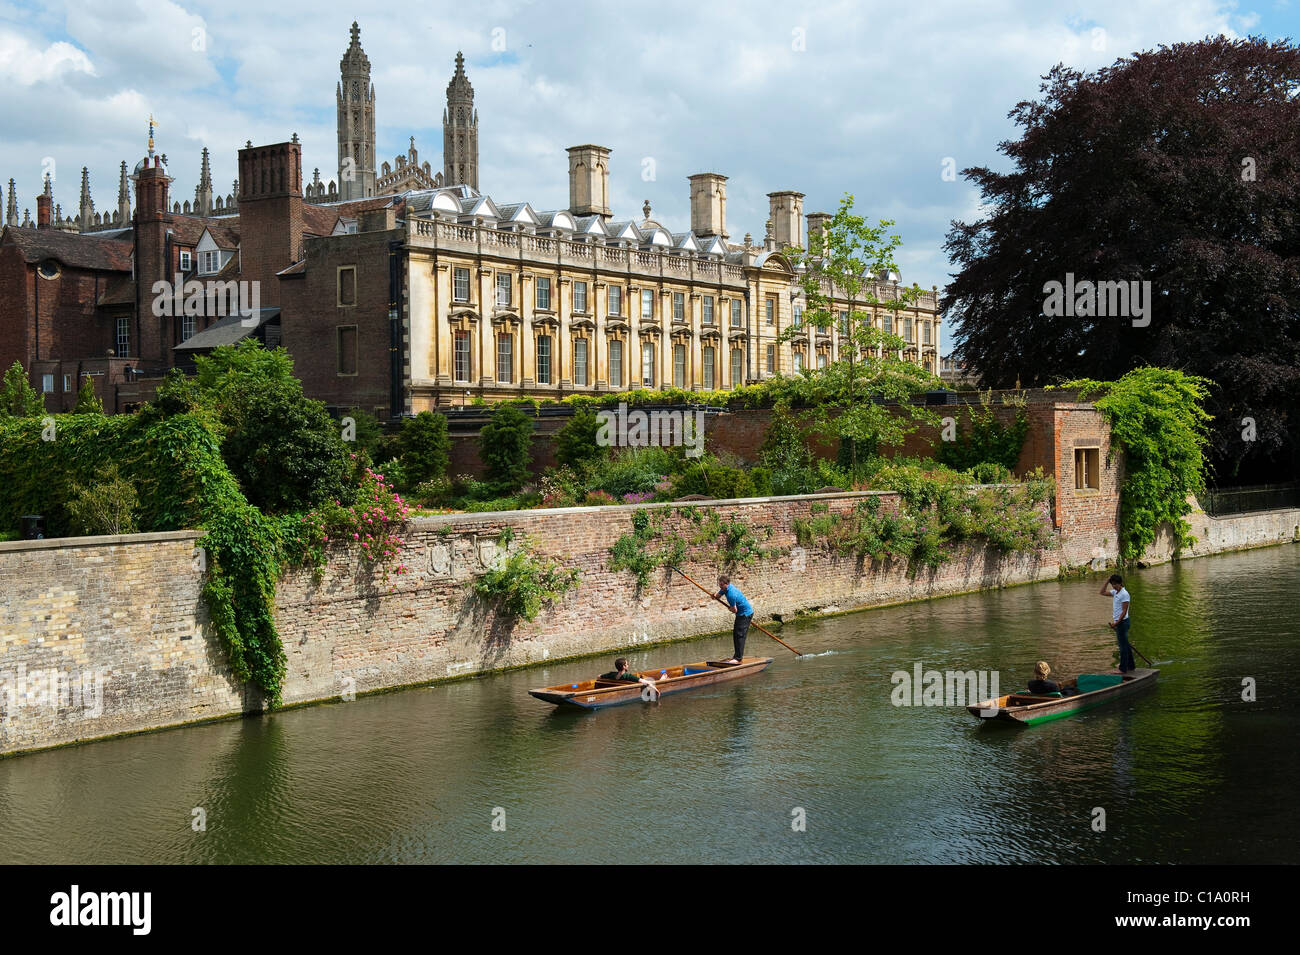 Tourists punting on The Backs, Cambridge Stock Photo